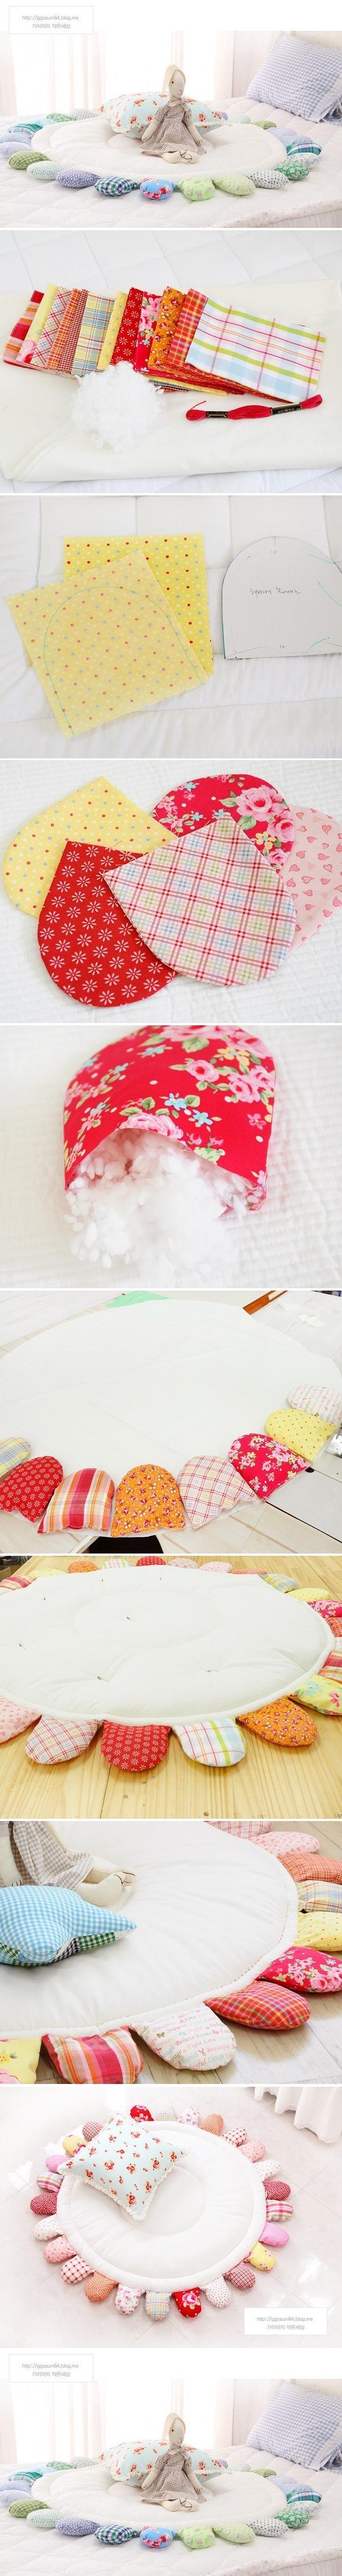 diy-children-rug-patchwork Holiday Decoration Patchwork Ideas - Step by step